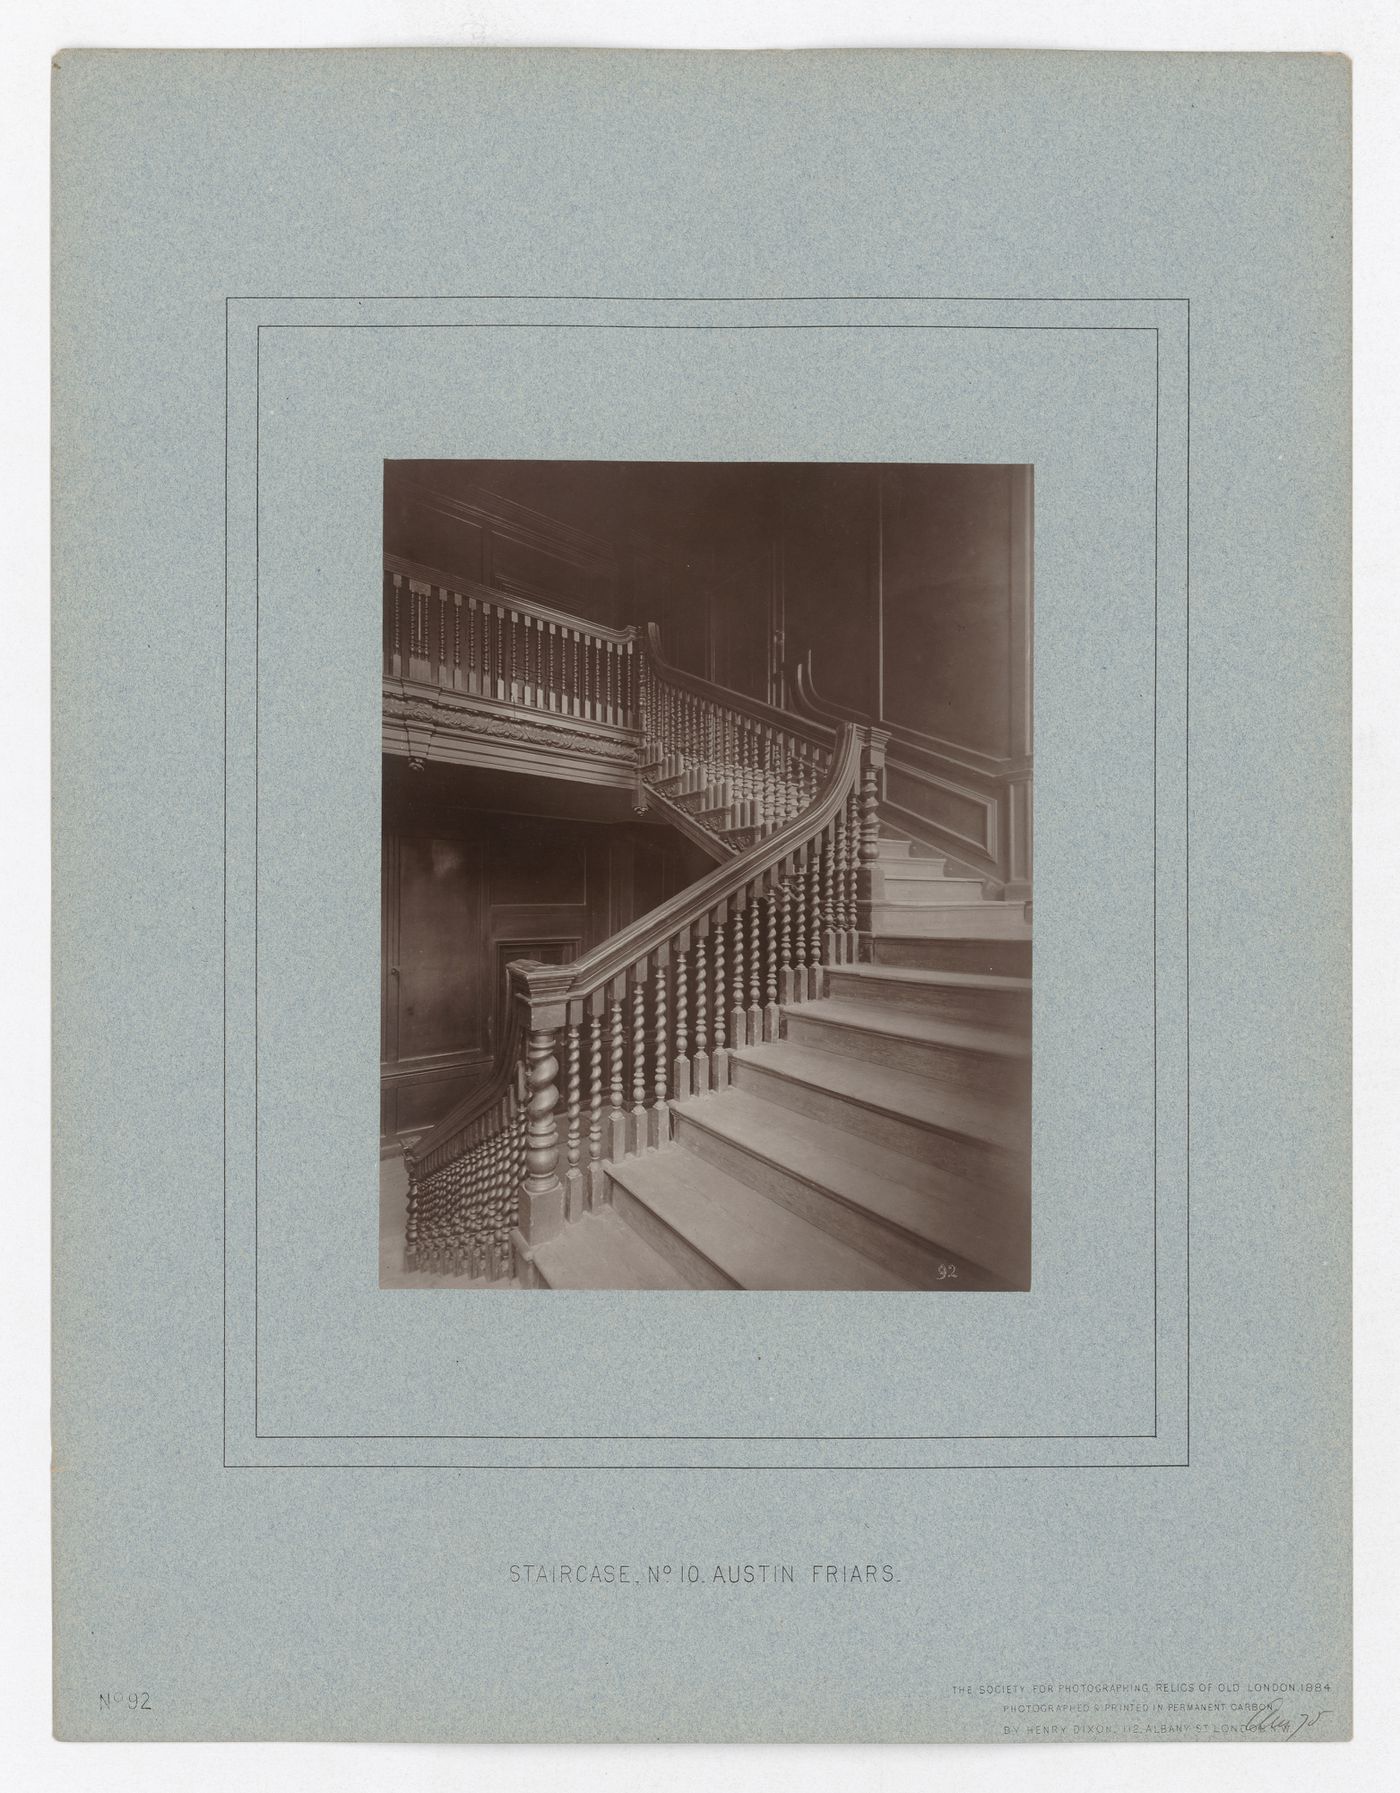 Staircase, No 10 Austin Friars